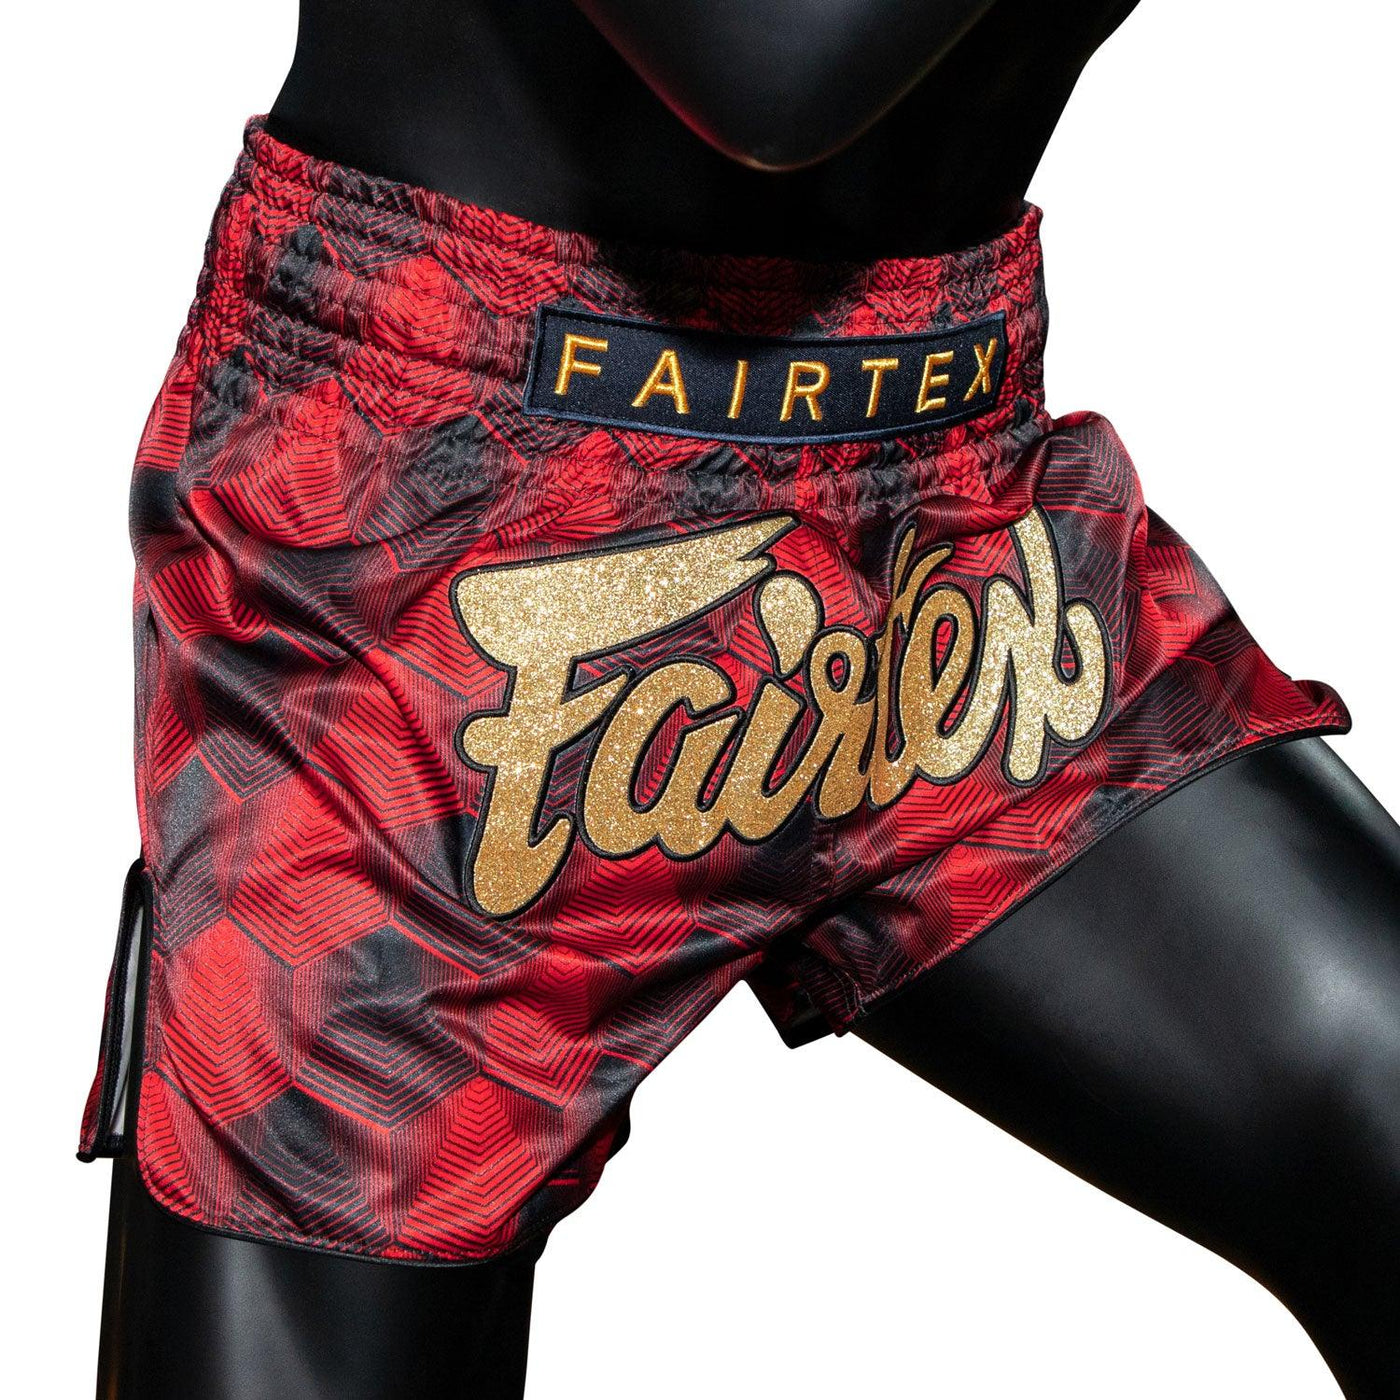 Fairtex Slim Cut Muay Thai Shorts - Rodtang Red - Muay Thailand